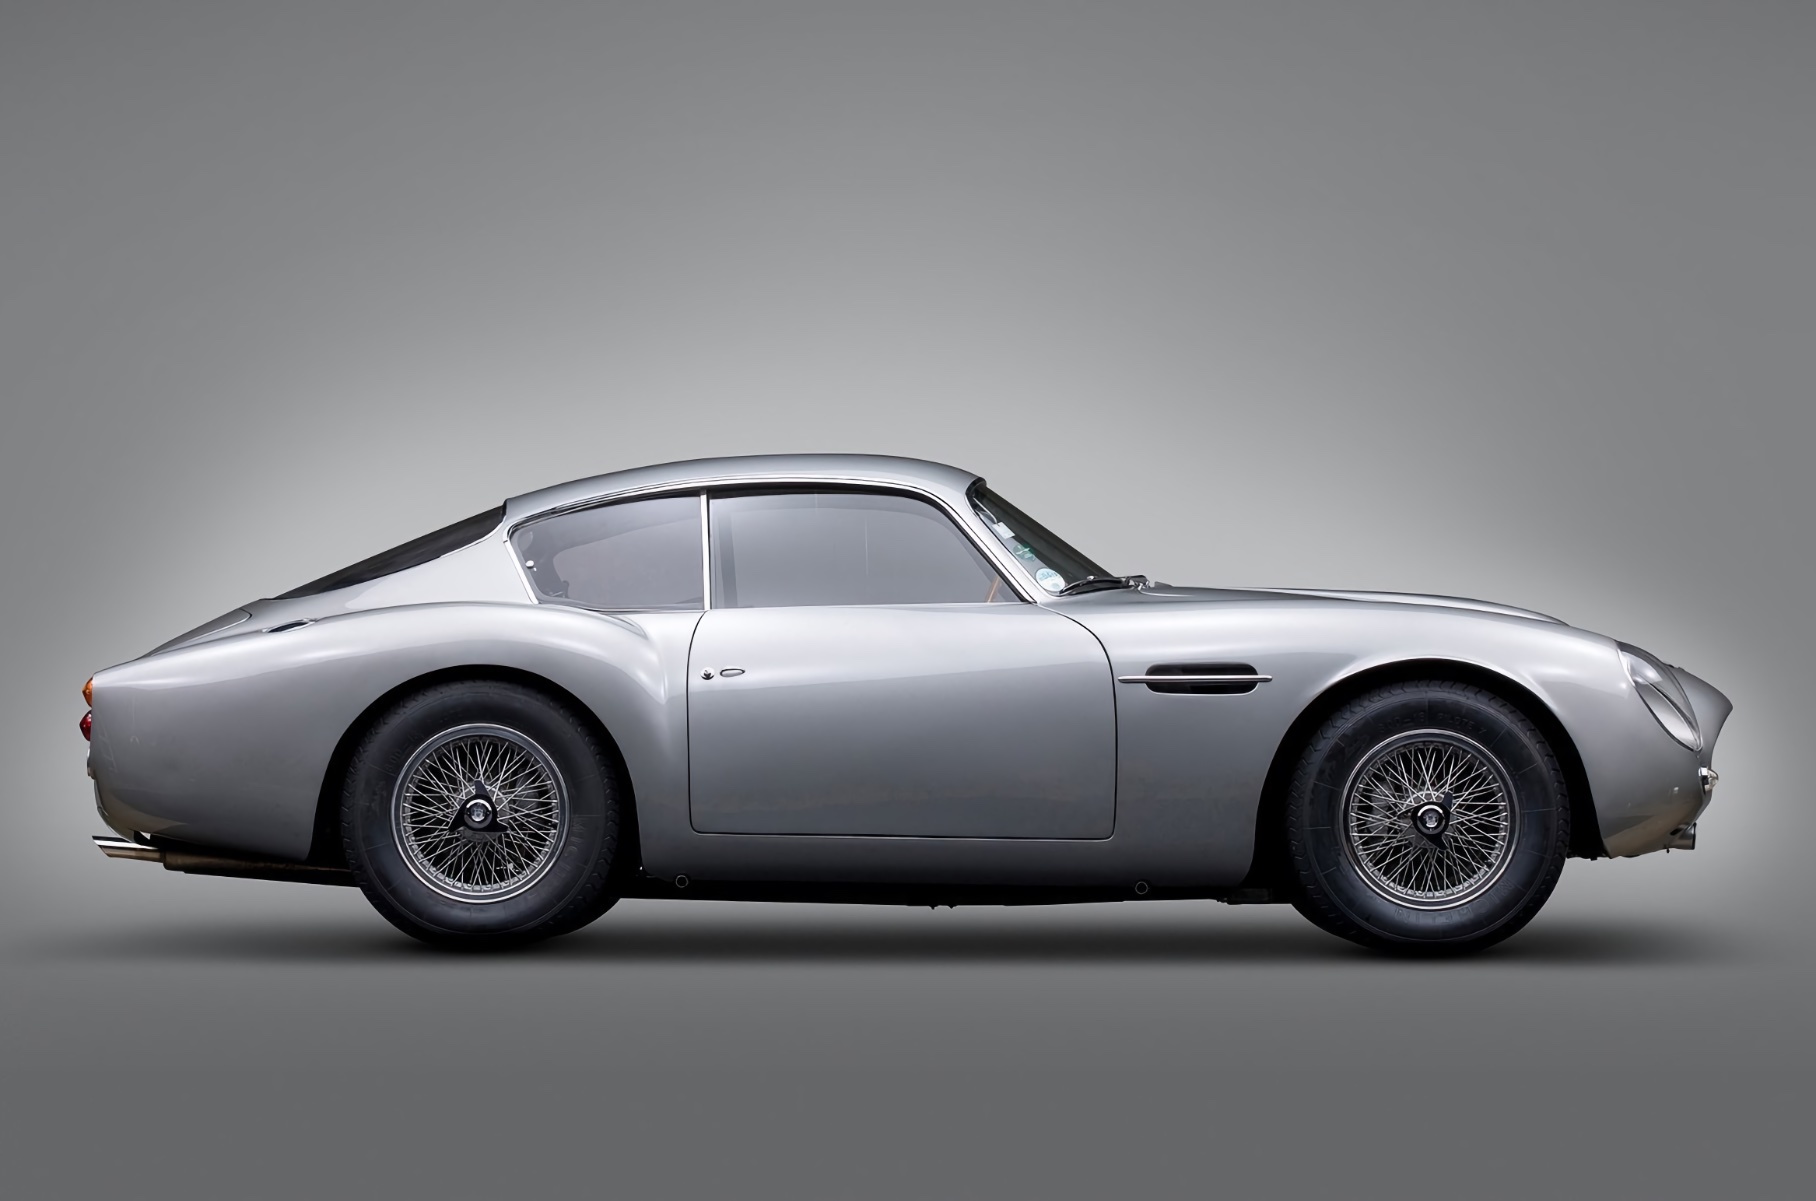 1962 Aston Martin DB4 GT Zagato